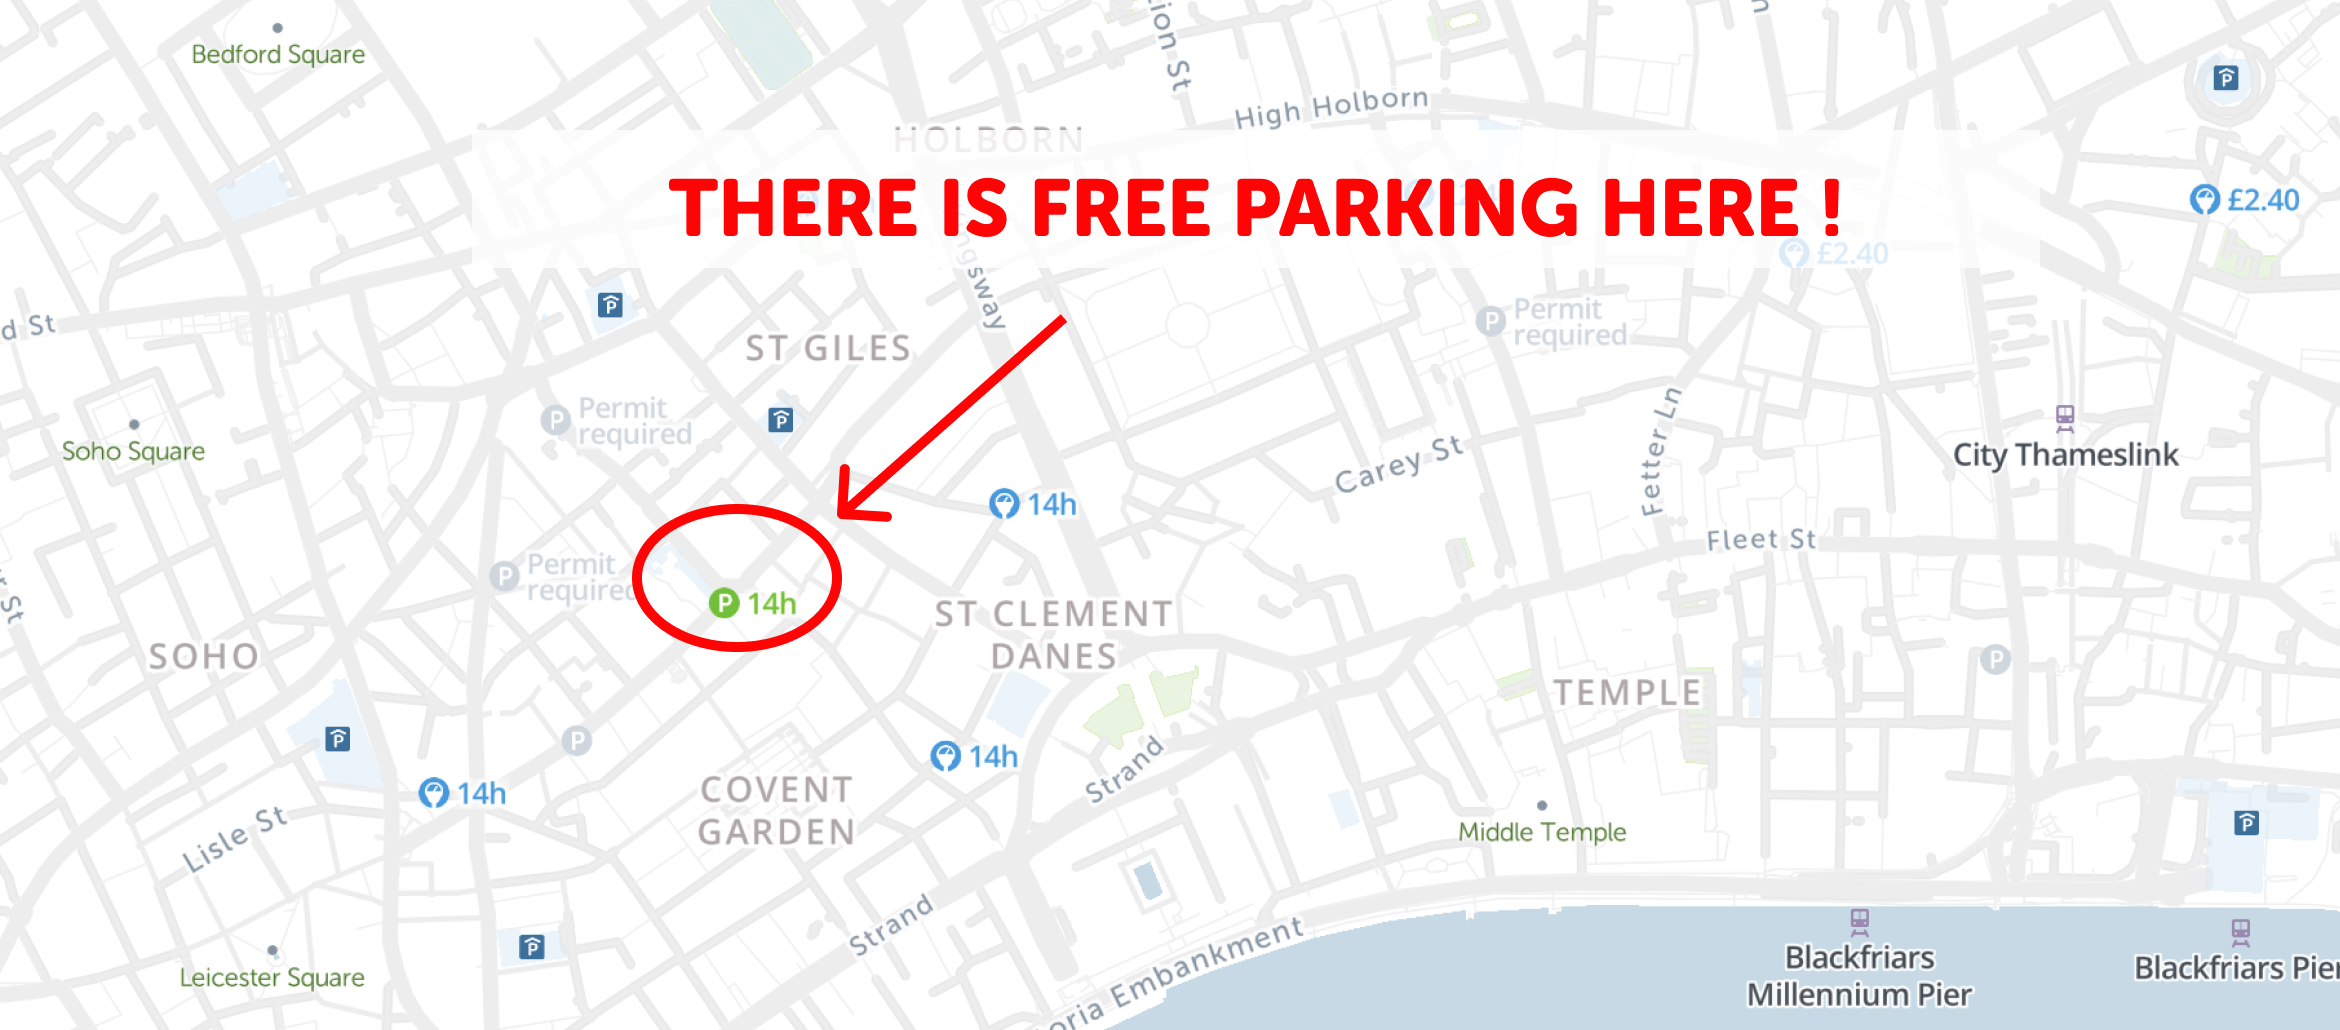 map of free parking in London - SpotAngels